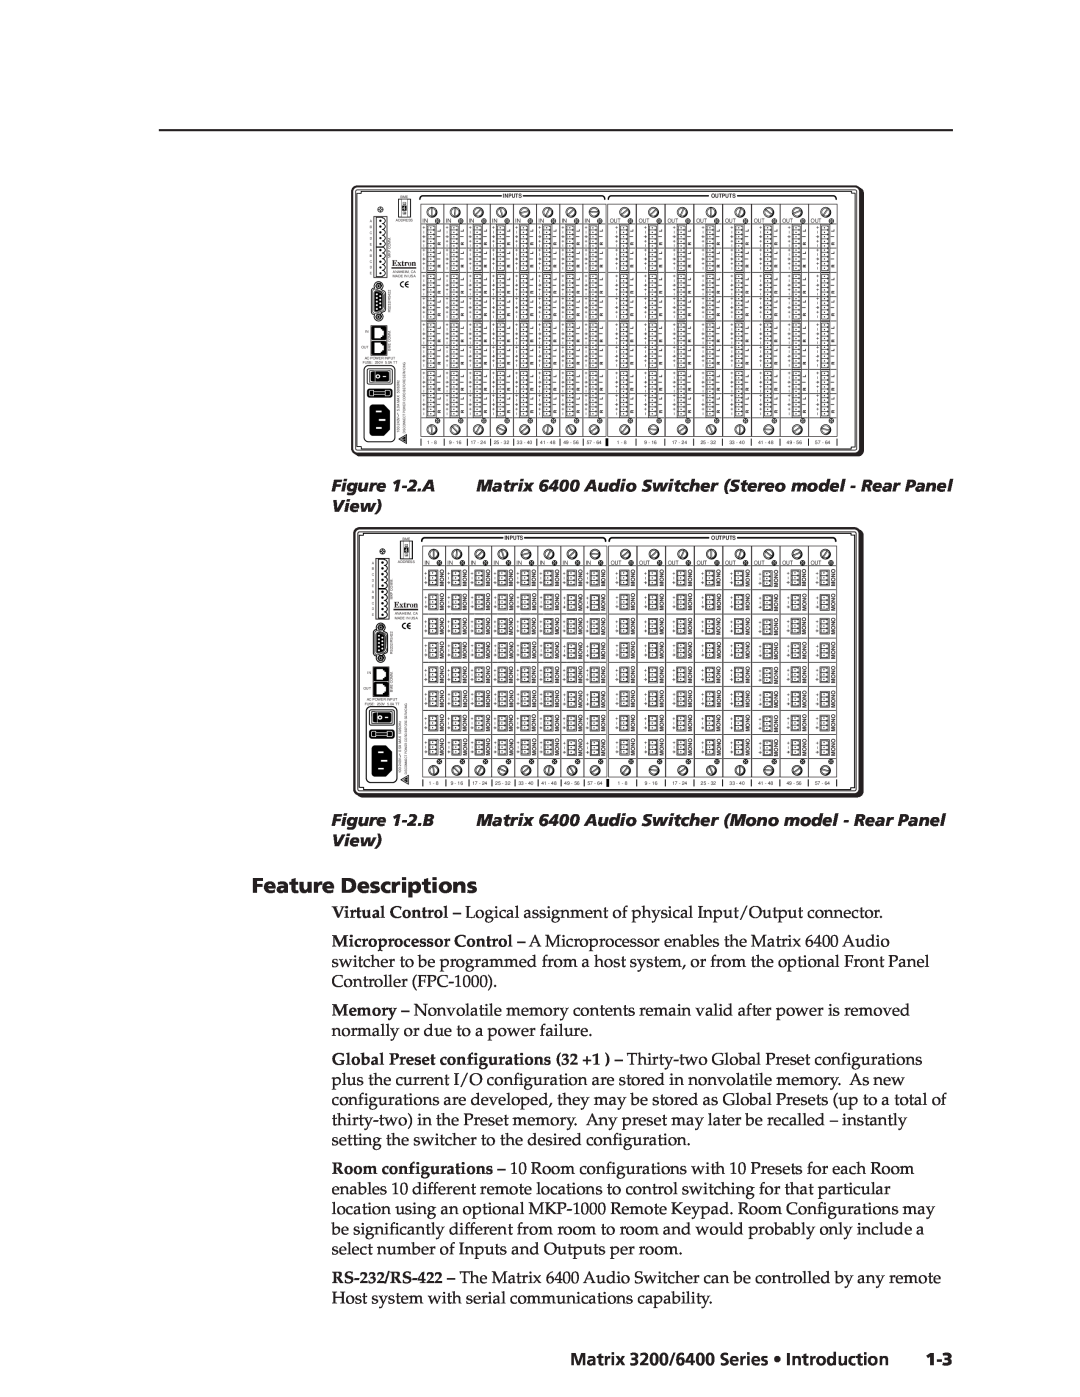 Extron electronic 3200s manual Feature Descriptions, 2.B Matrix 6400 Audio Switcher Mono model - Rear Panel View 